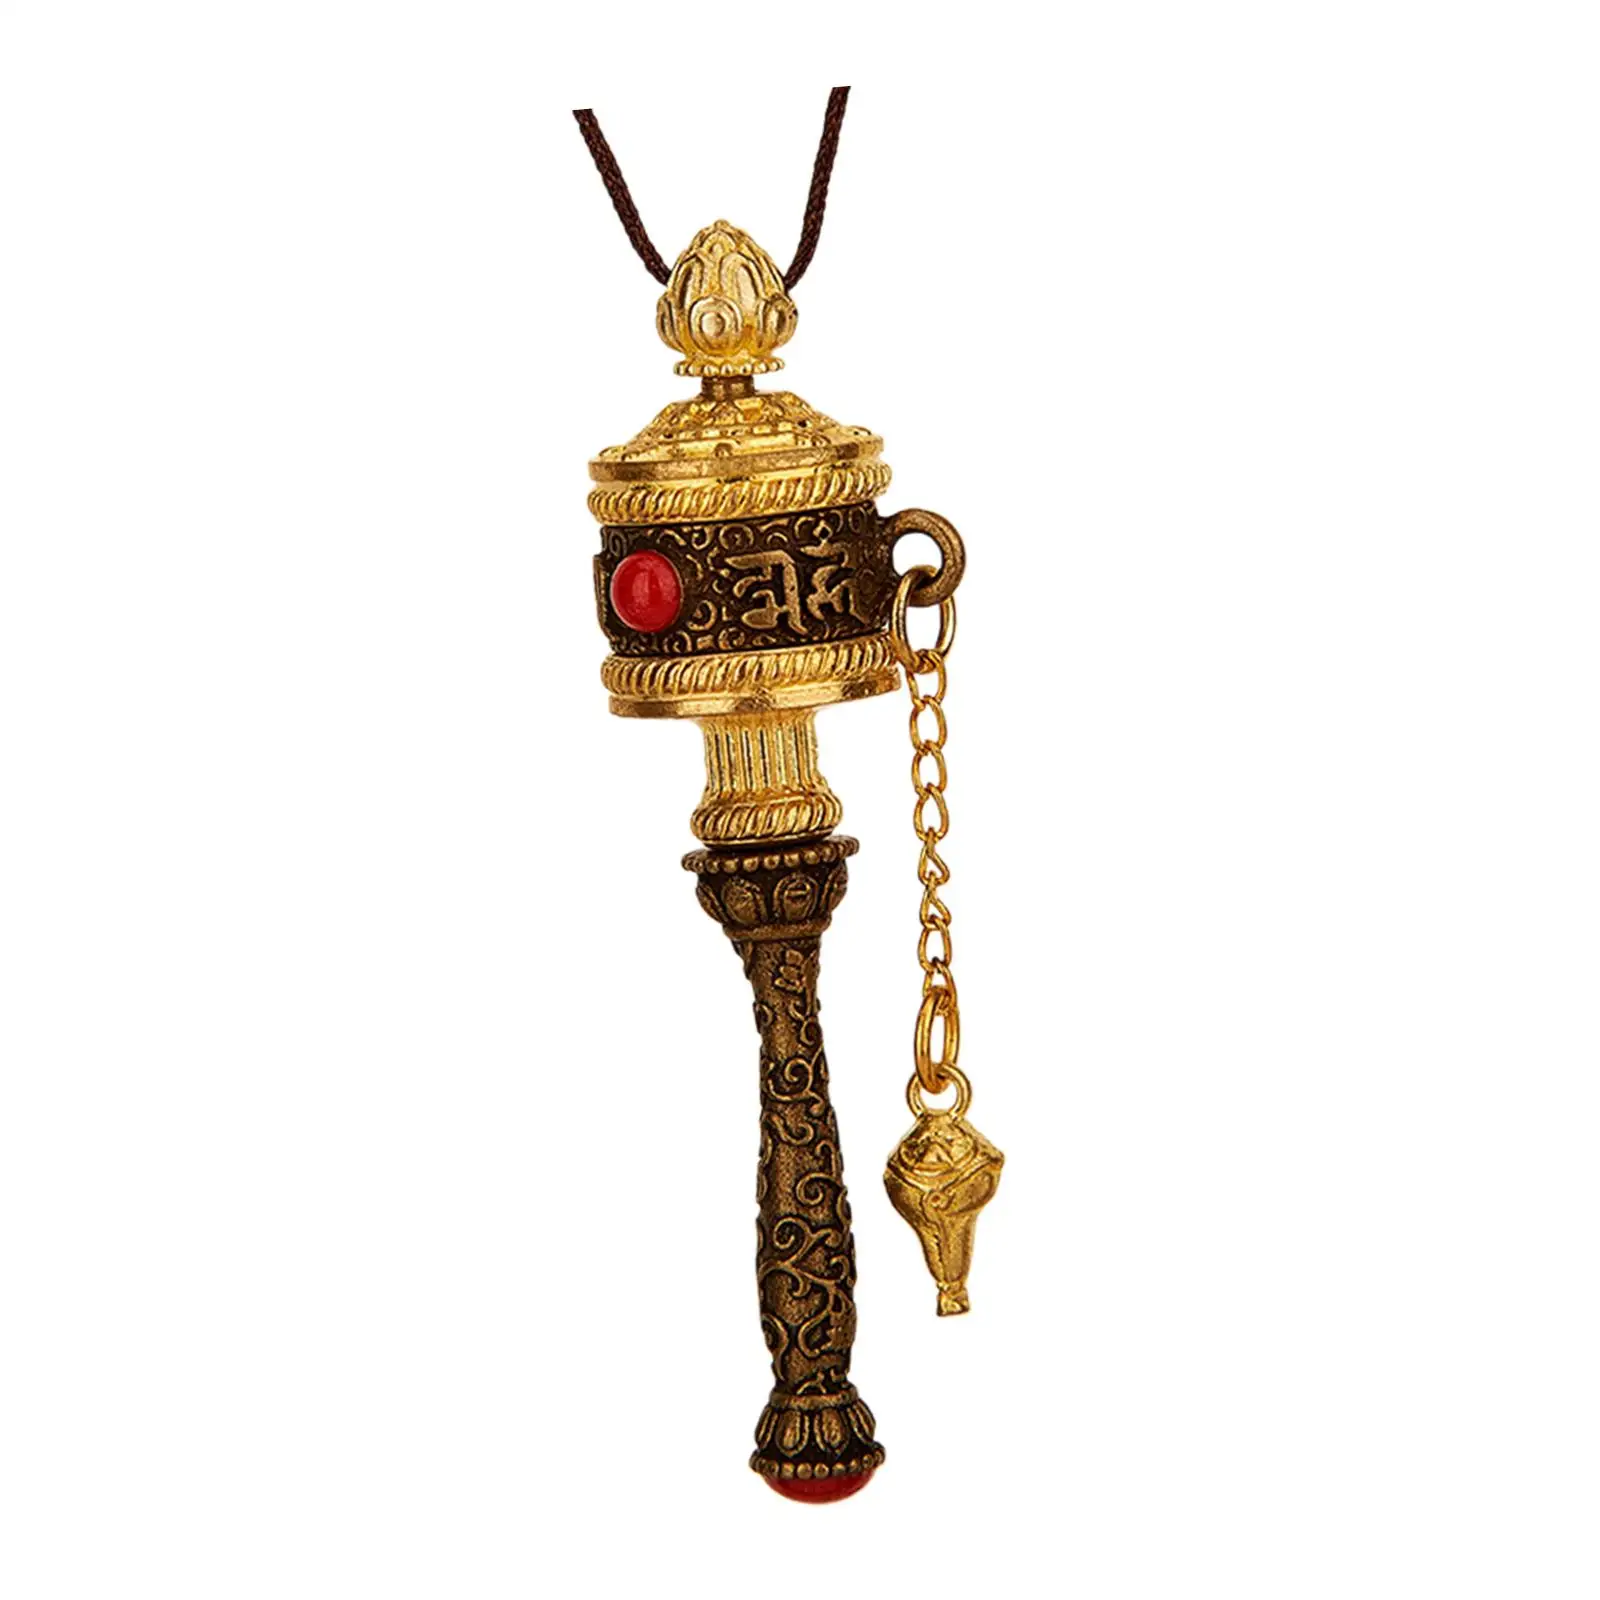 Six Character Truth Prayer Wheel Pendant Religious Ornament Necklace Tibetan Copper Buddhist Accessory for Women Men